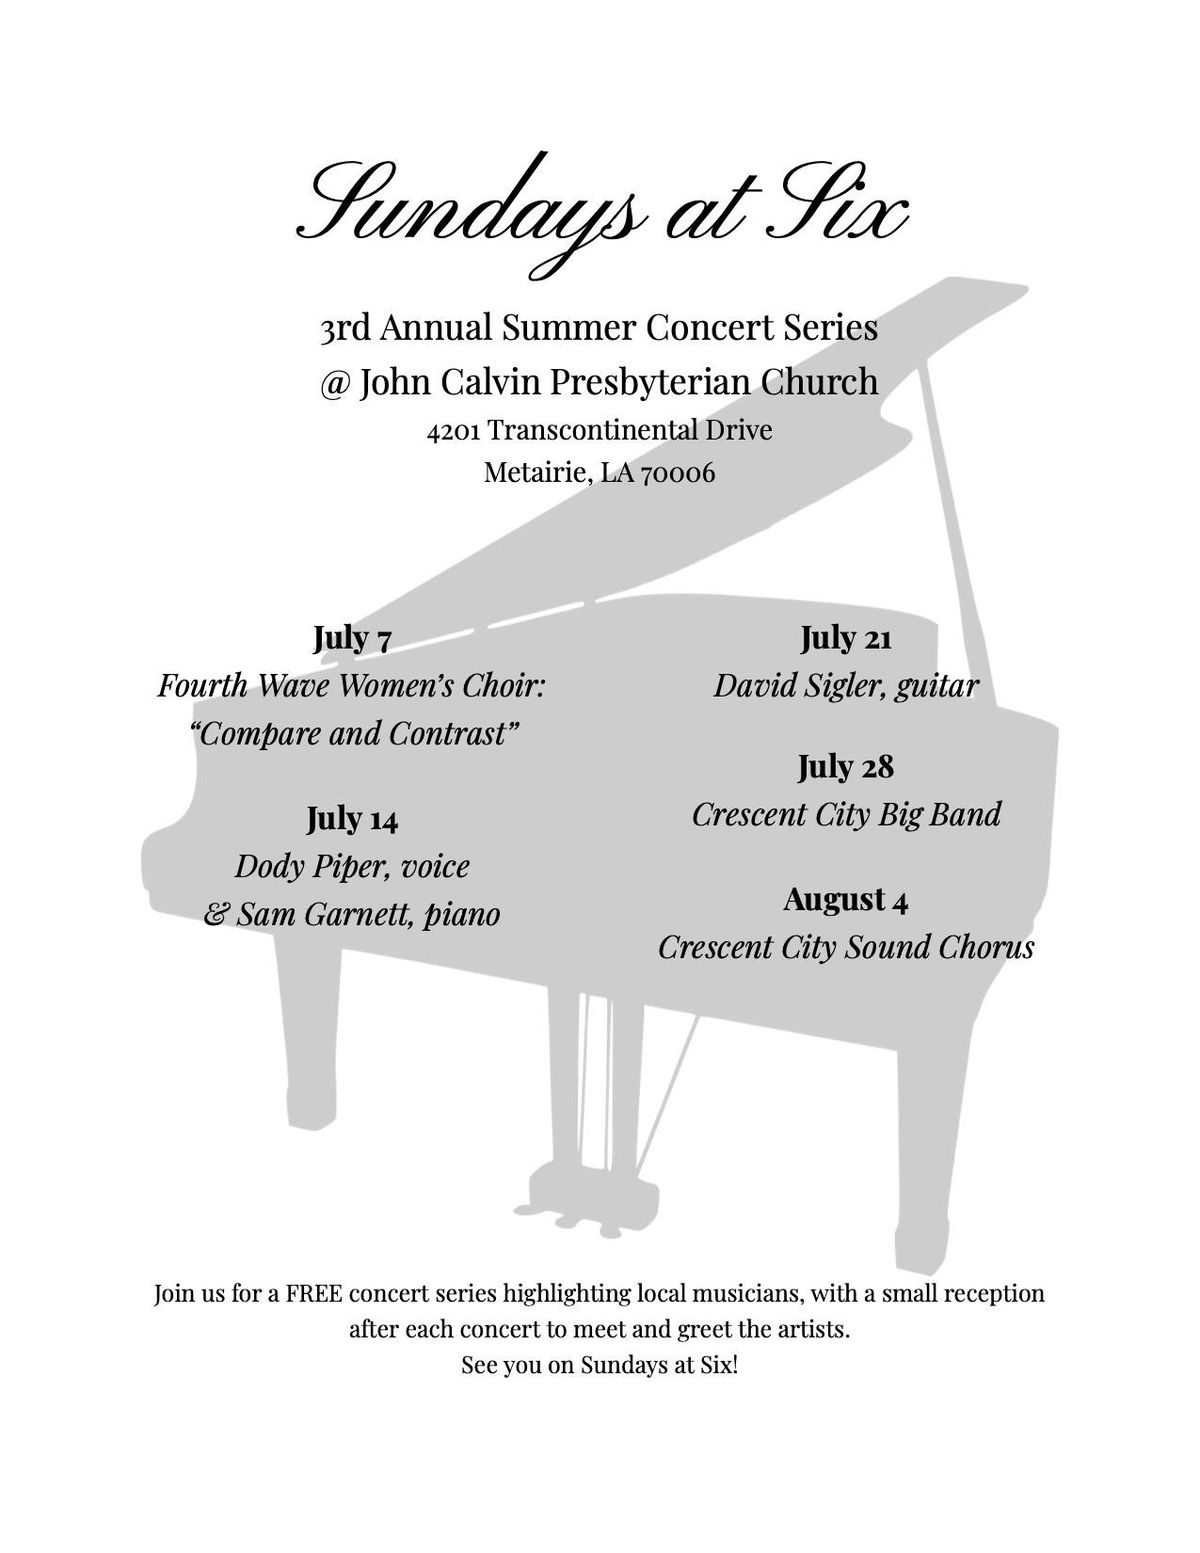 3rd Annual Sundays @ Six Concert Series